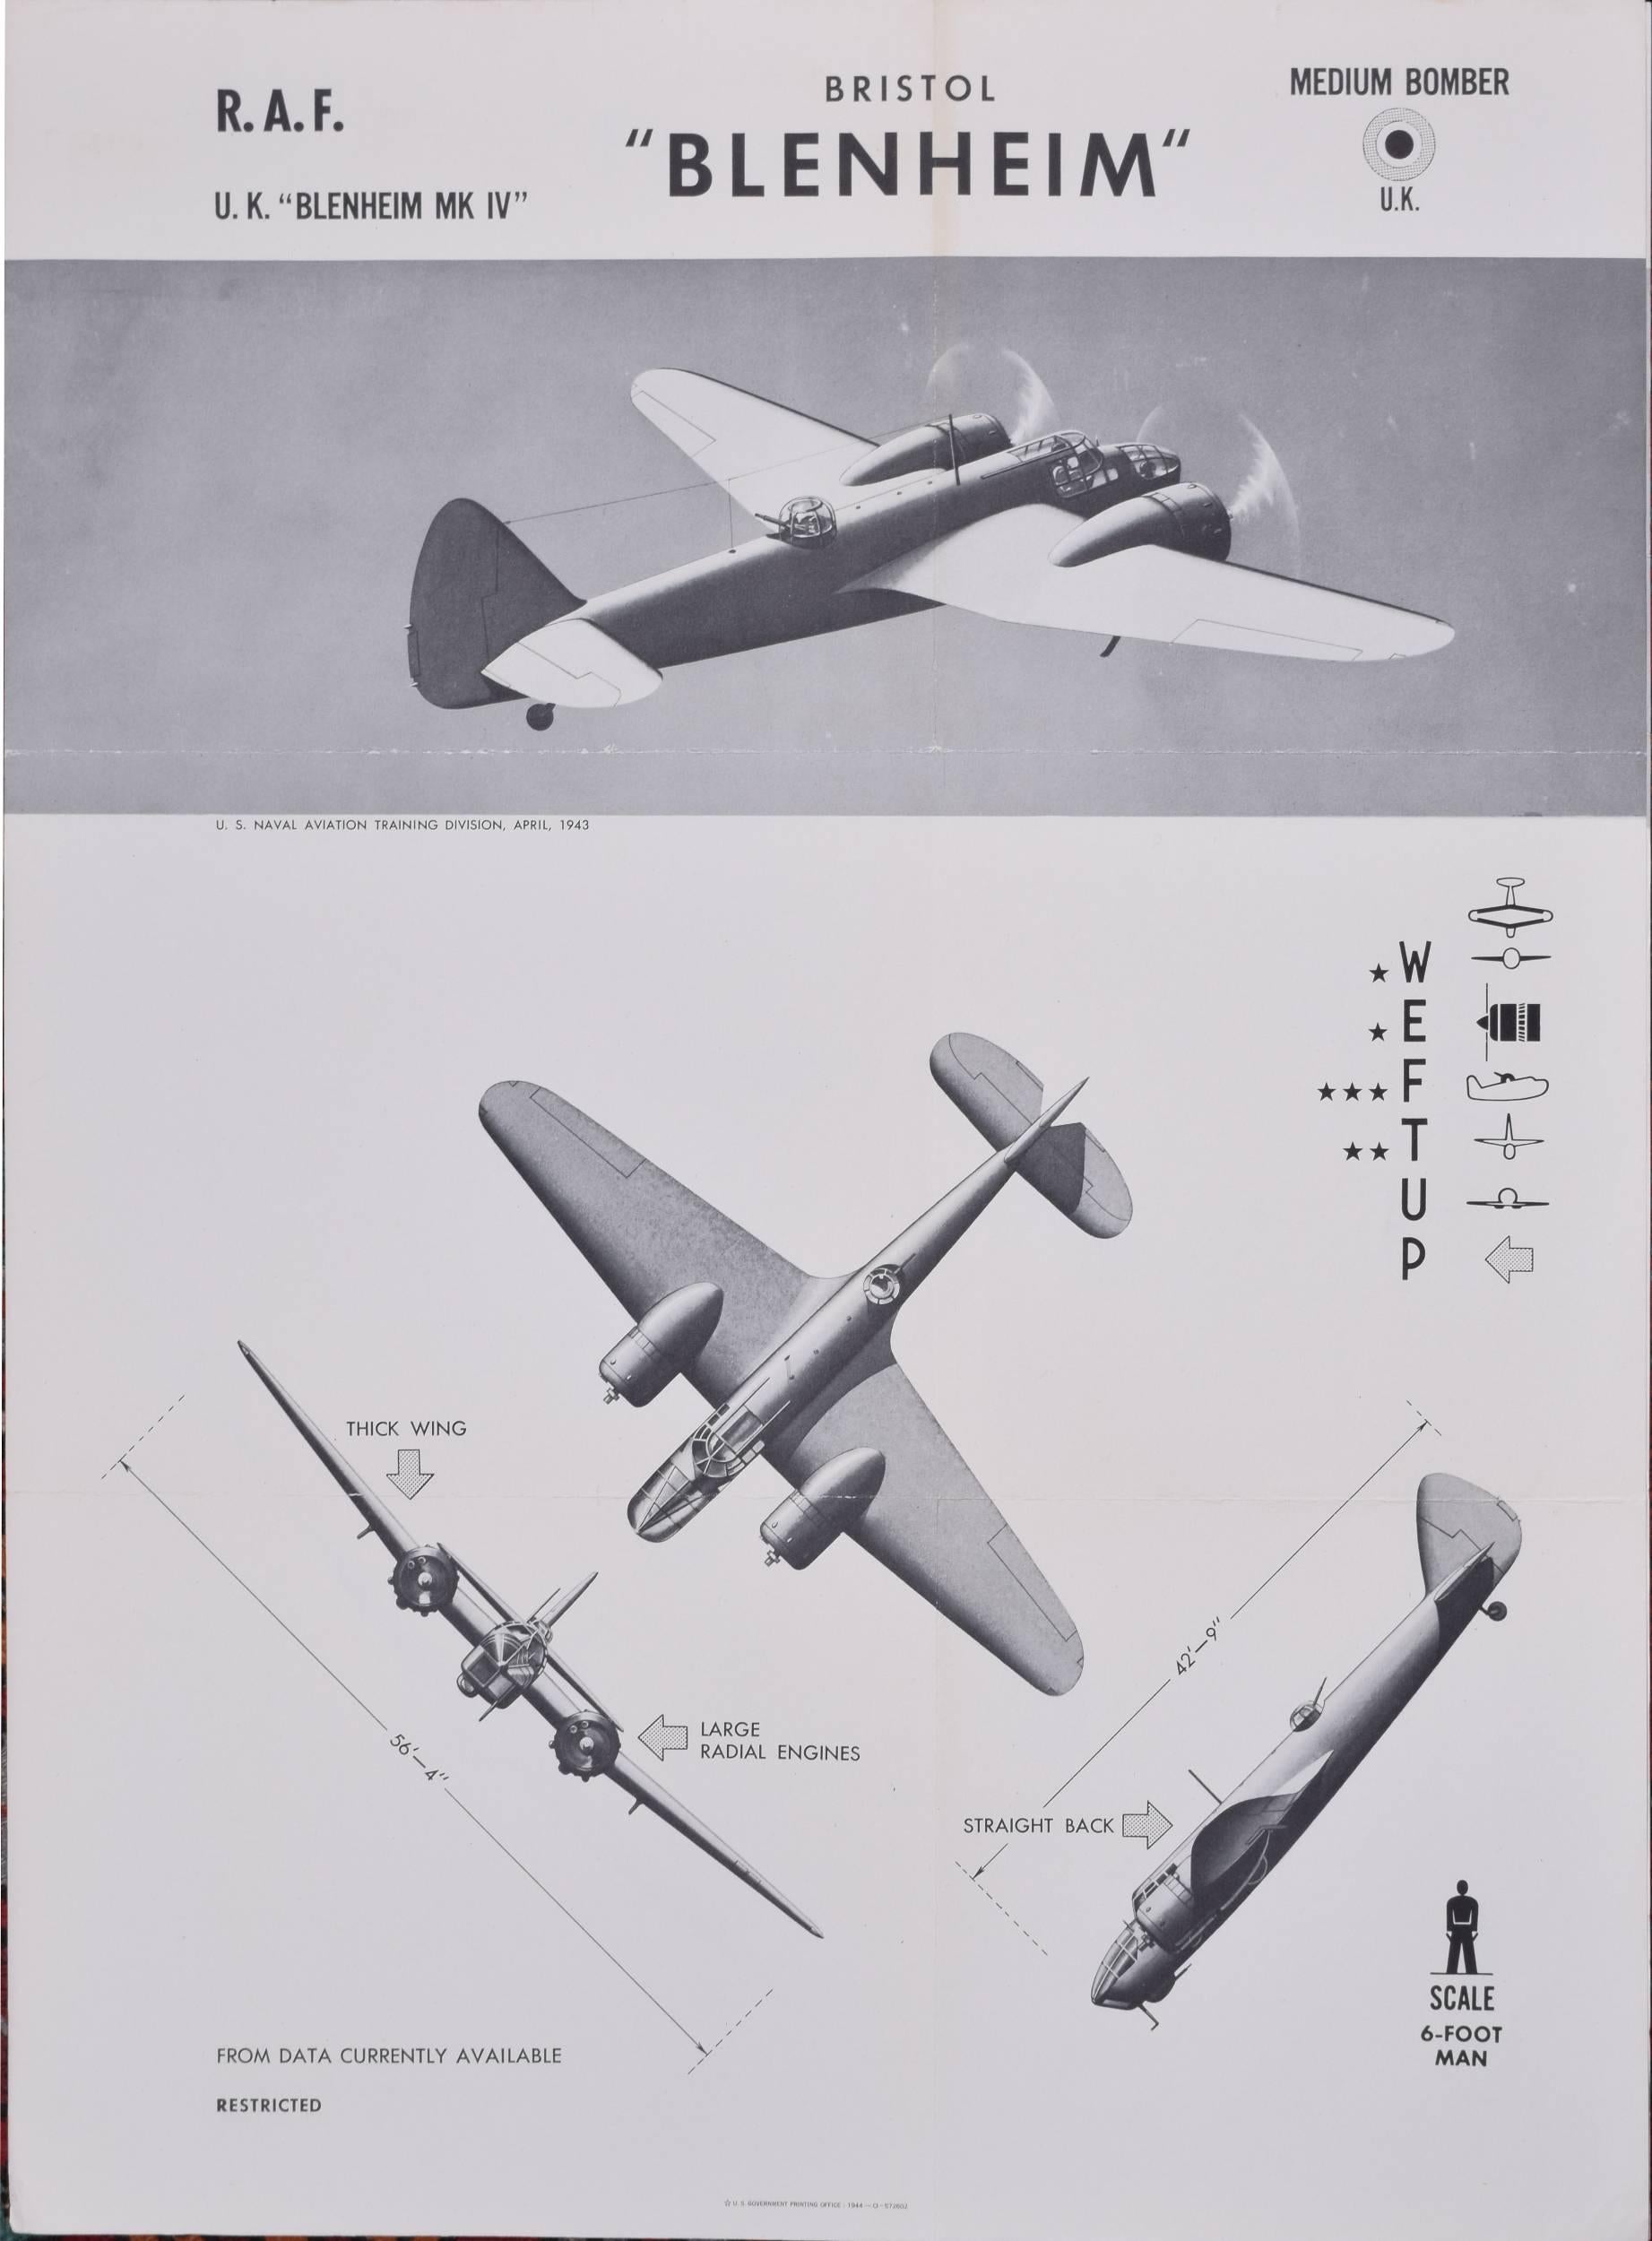 Unknown Print - 1943 Royal Air Force Bristol Blenheim poster US Naval Aviation Training Division